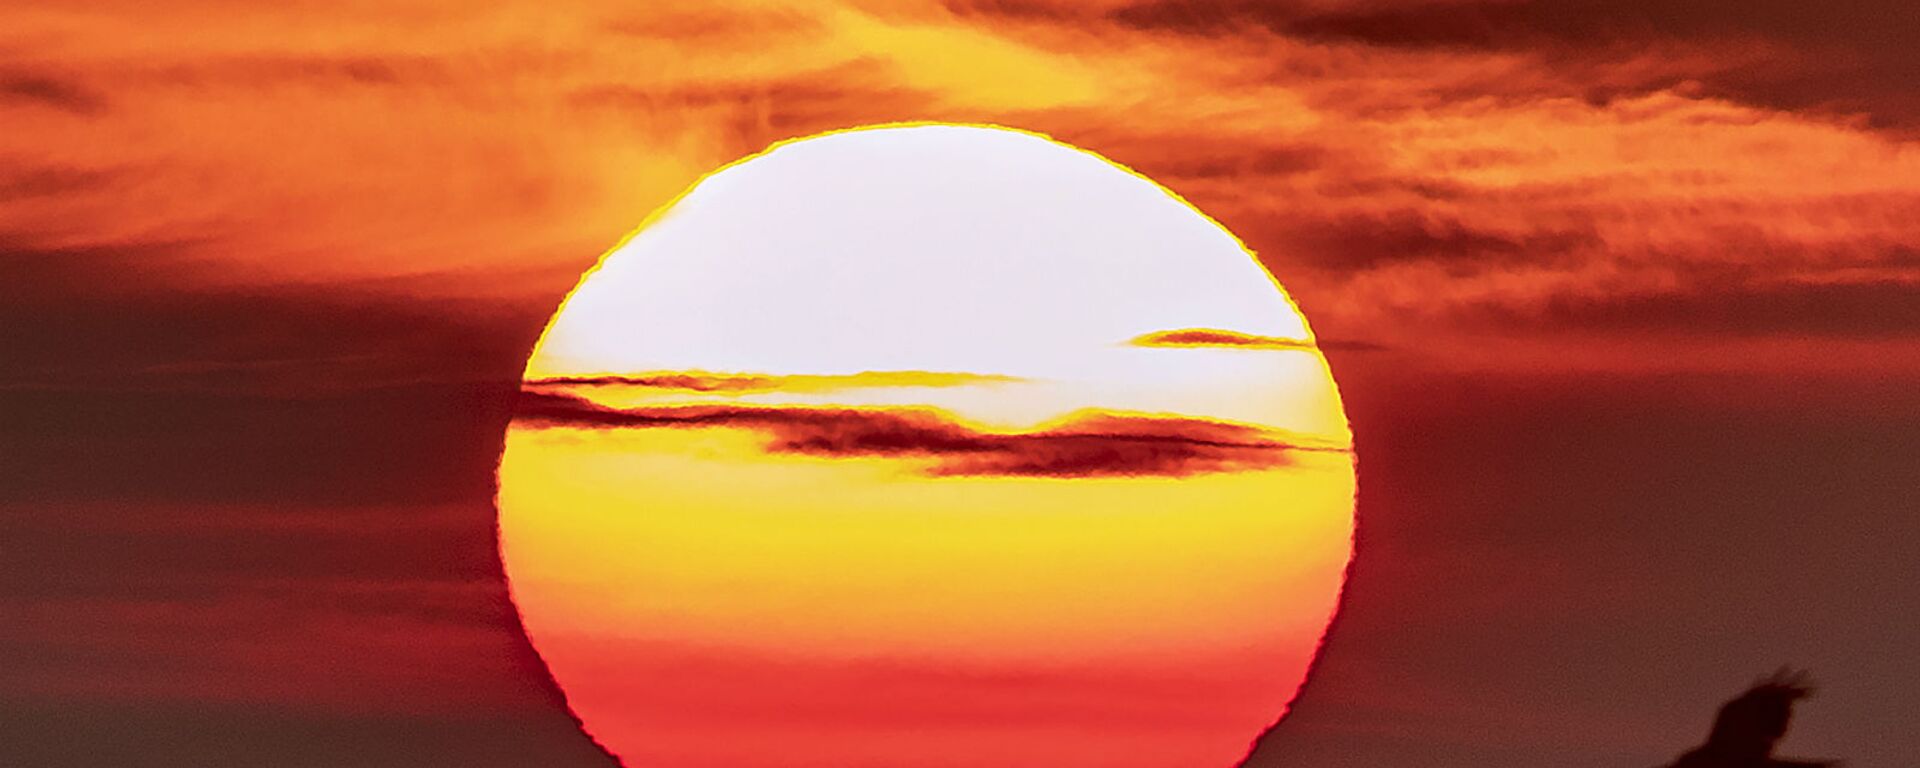 Восход солнца в день летнего солнцестояния (21 июня 2019). Франкфурт, Германия - Sputnik Армения, 1920, 20.04.2021